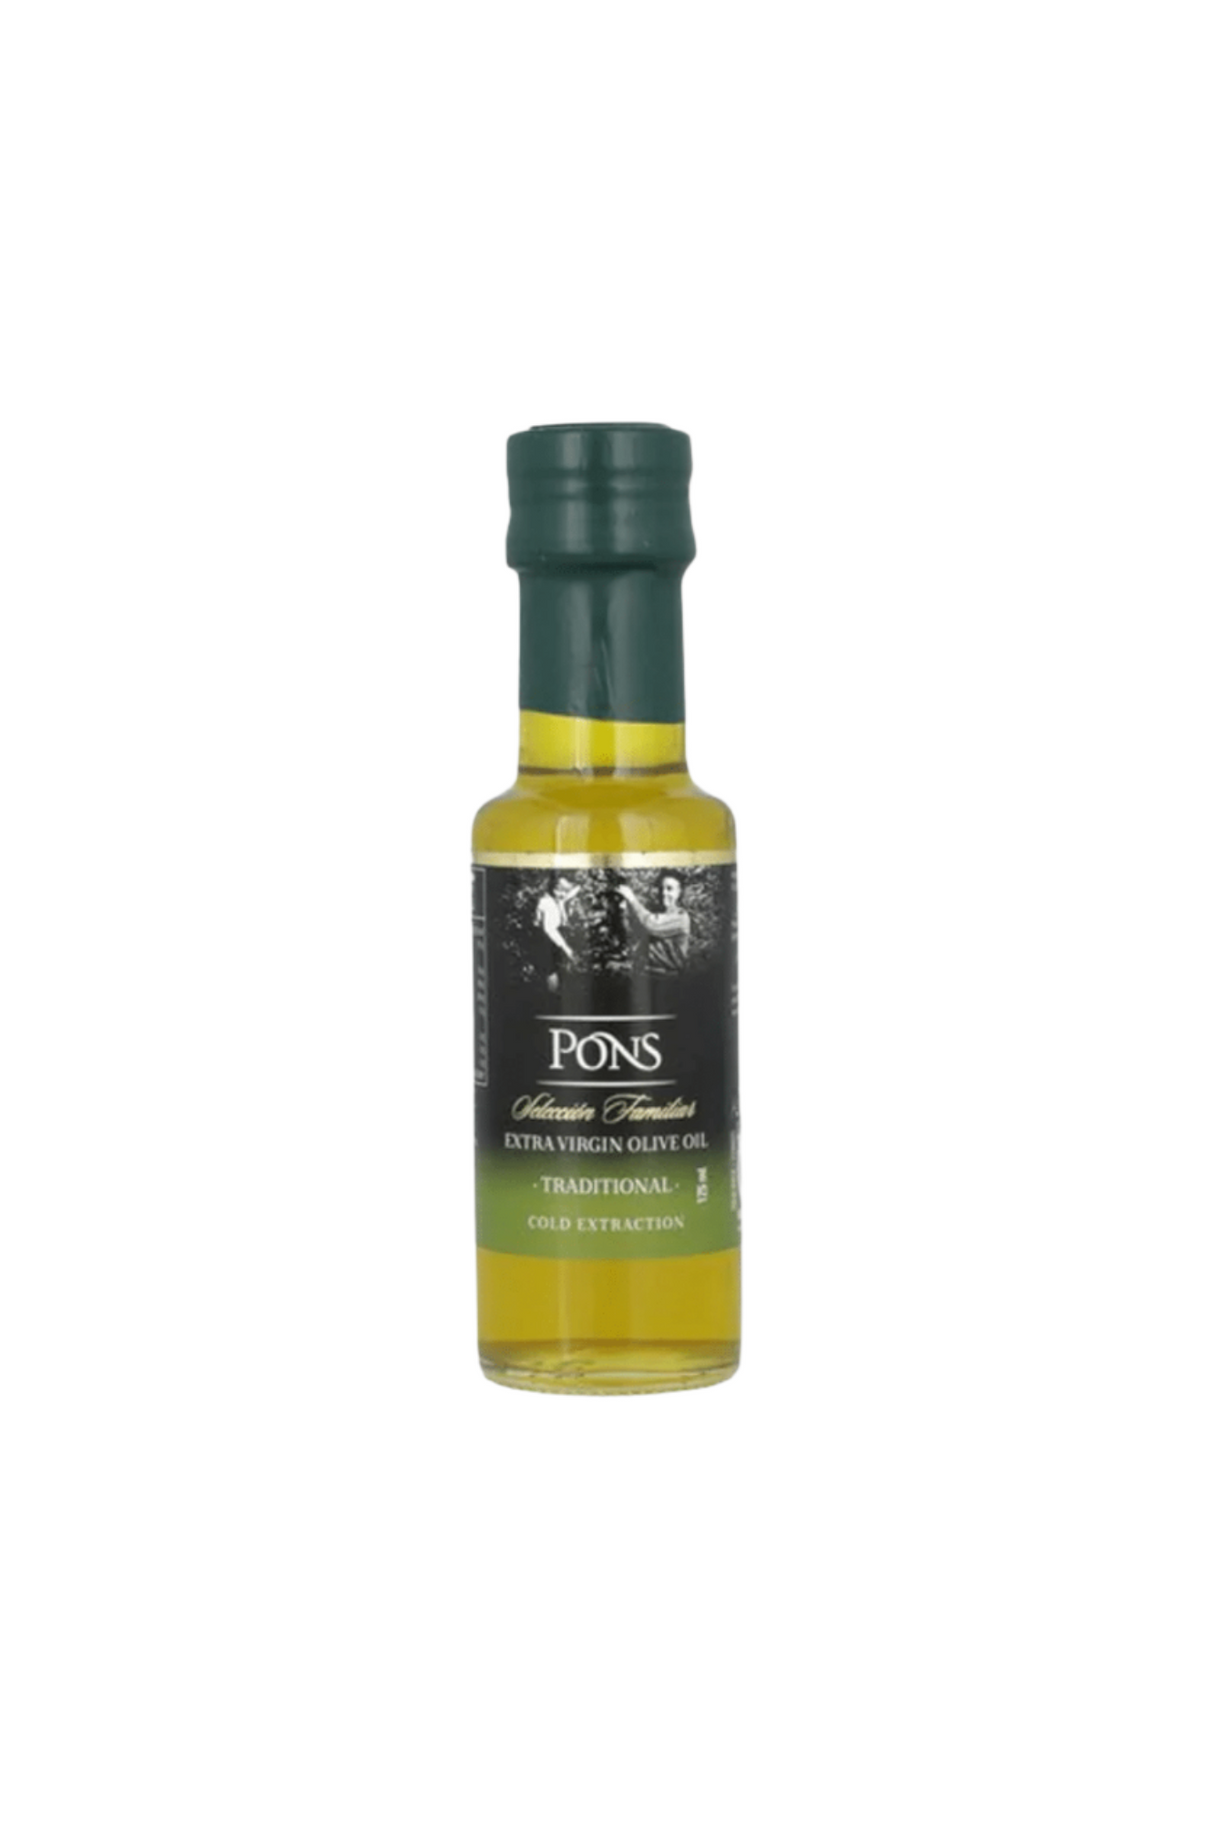 pons olive oil extra virgin 125ml